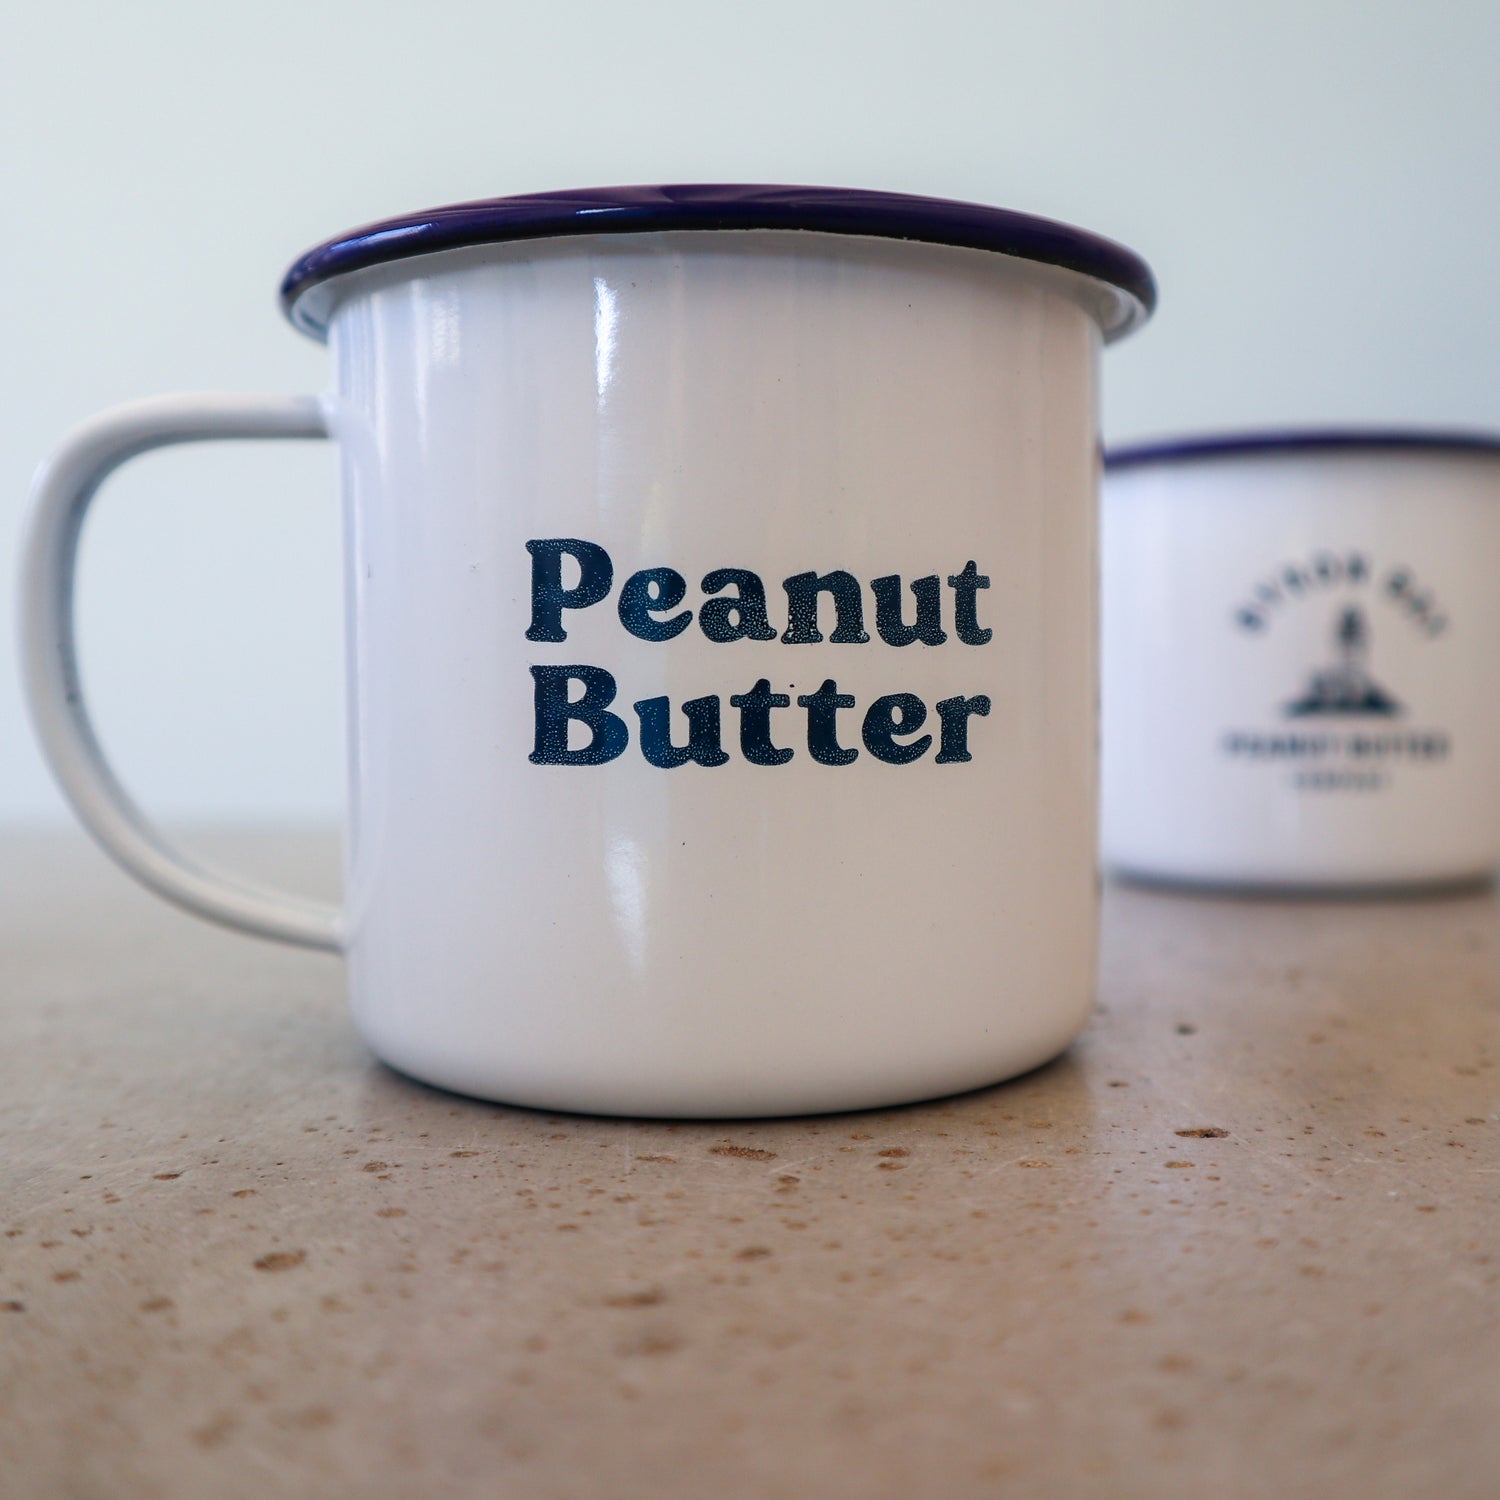 The Byron Bay Peanut Butter Mug